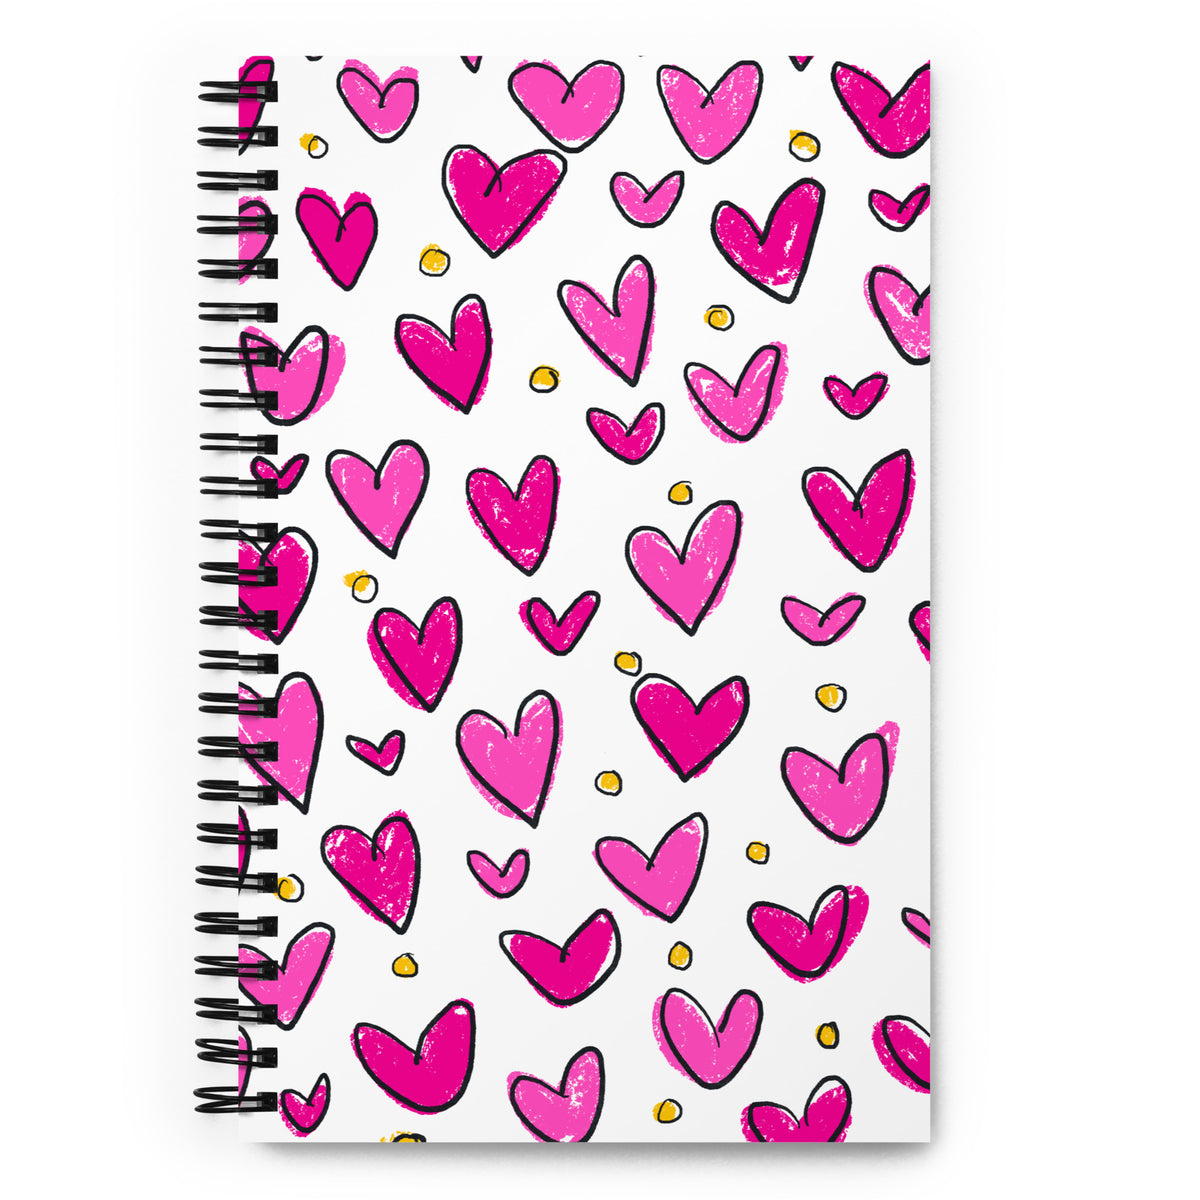 PINK SKETCHY HEART Spiral notebook